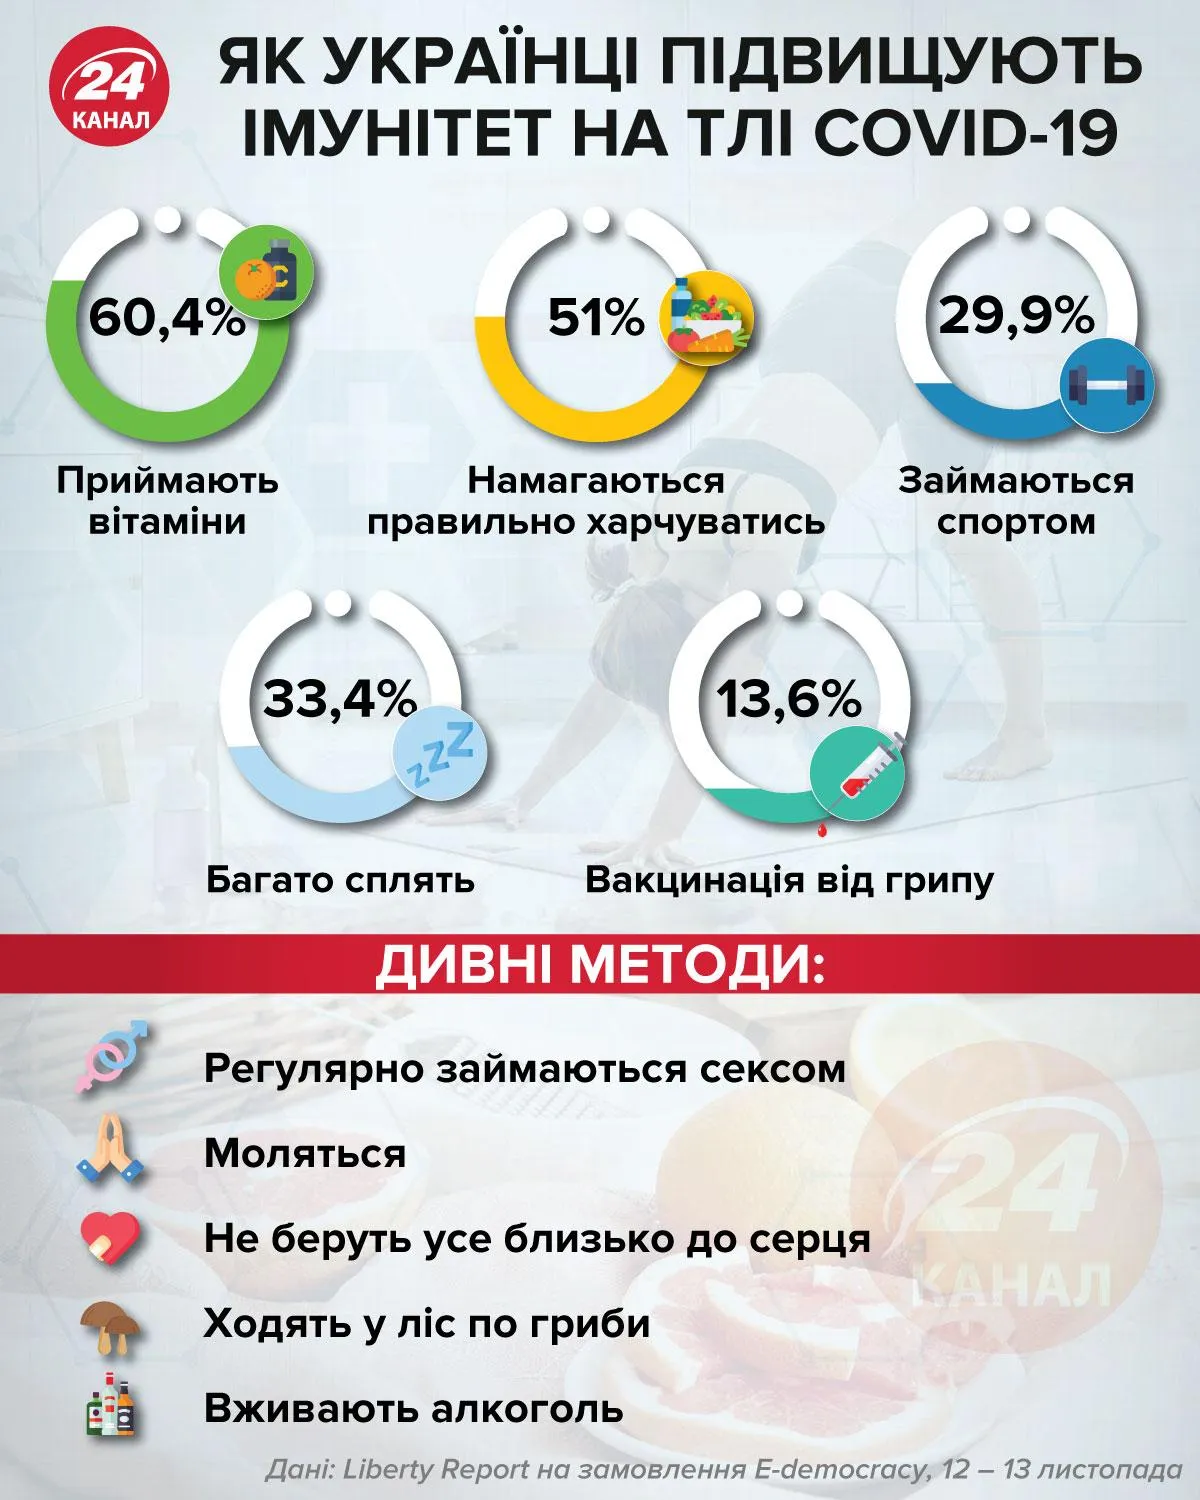 Як українці зміцнюють імунітет на тлі коронавірусу Інфографіка 24 канал